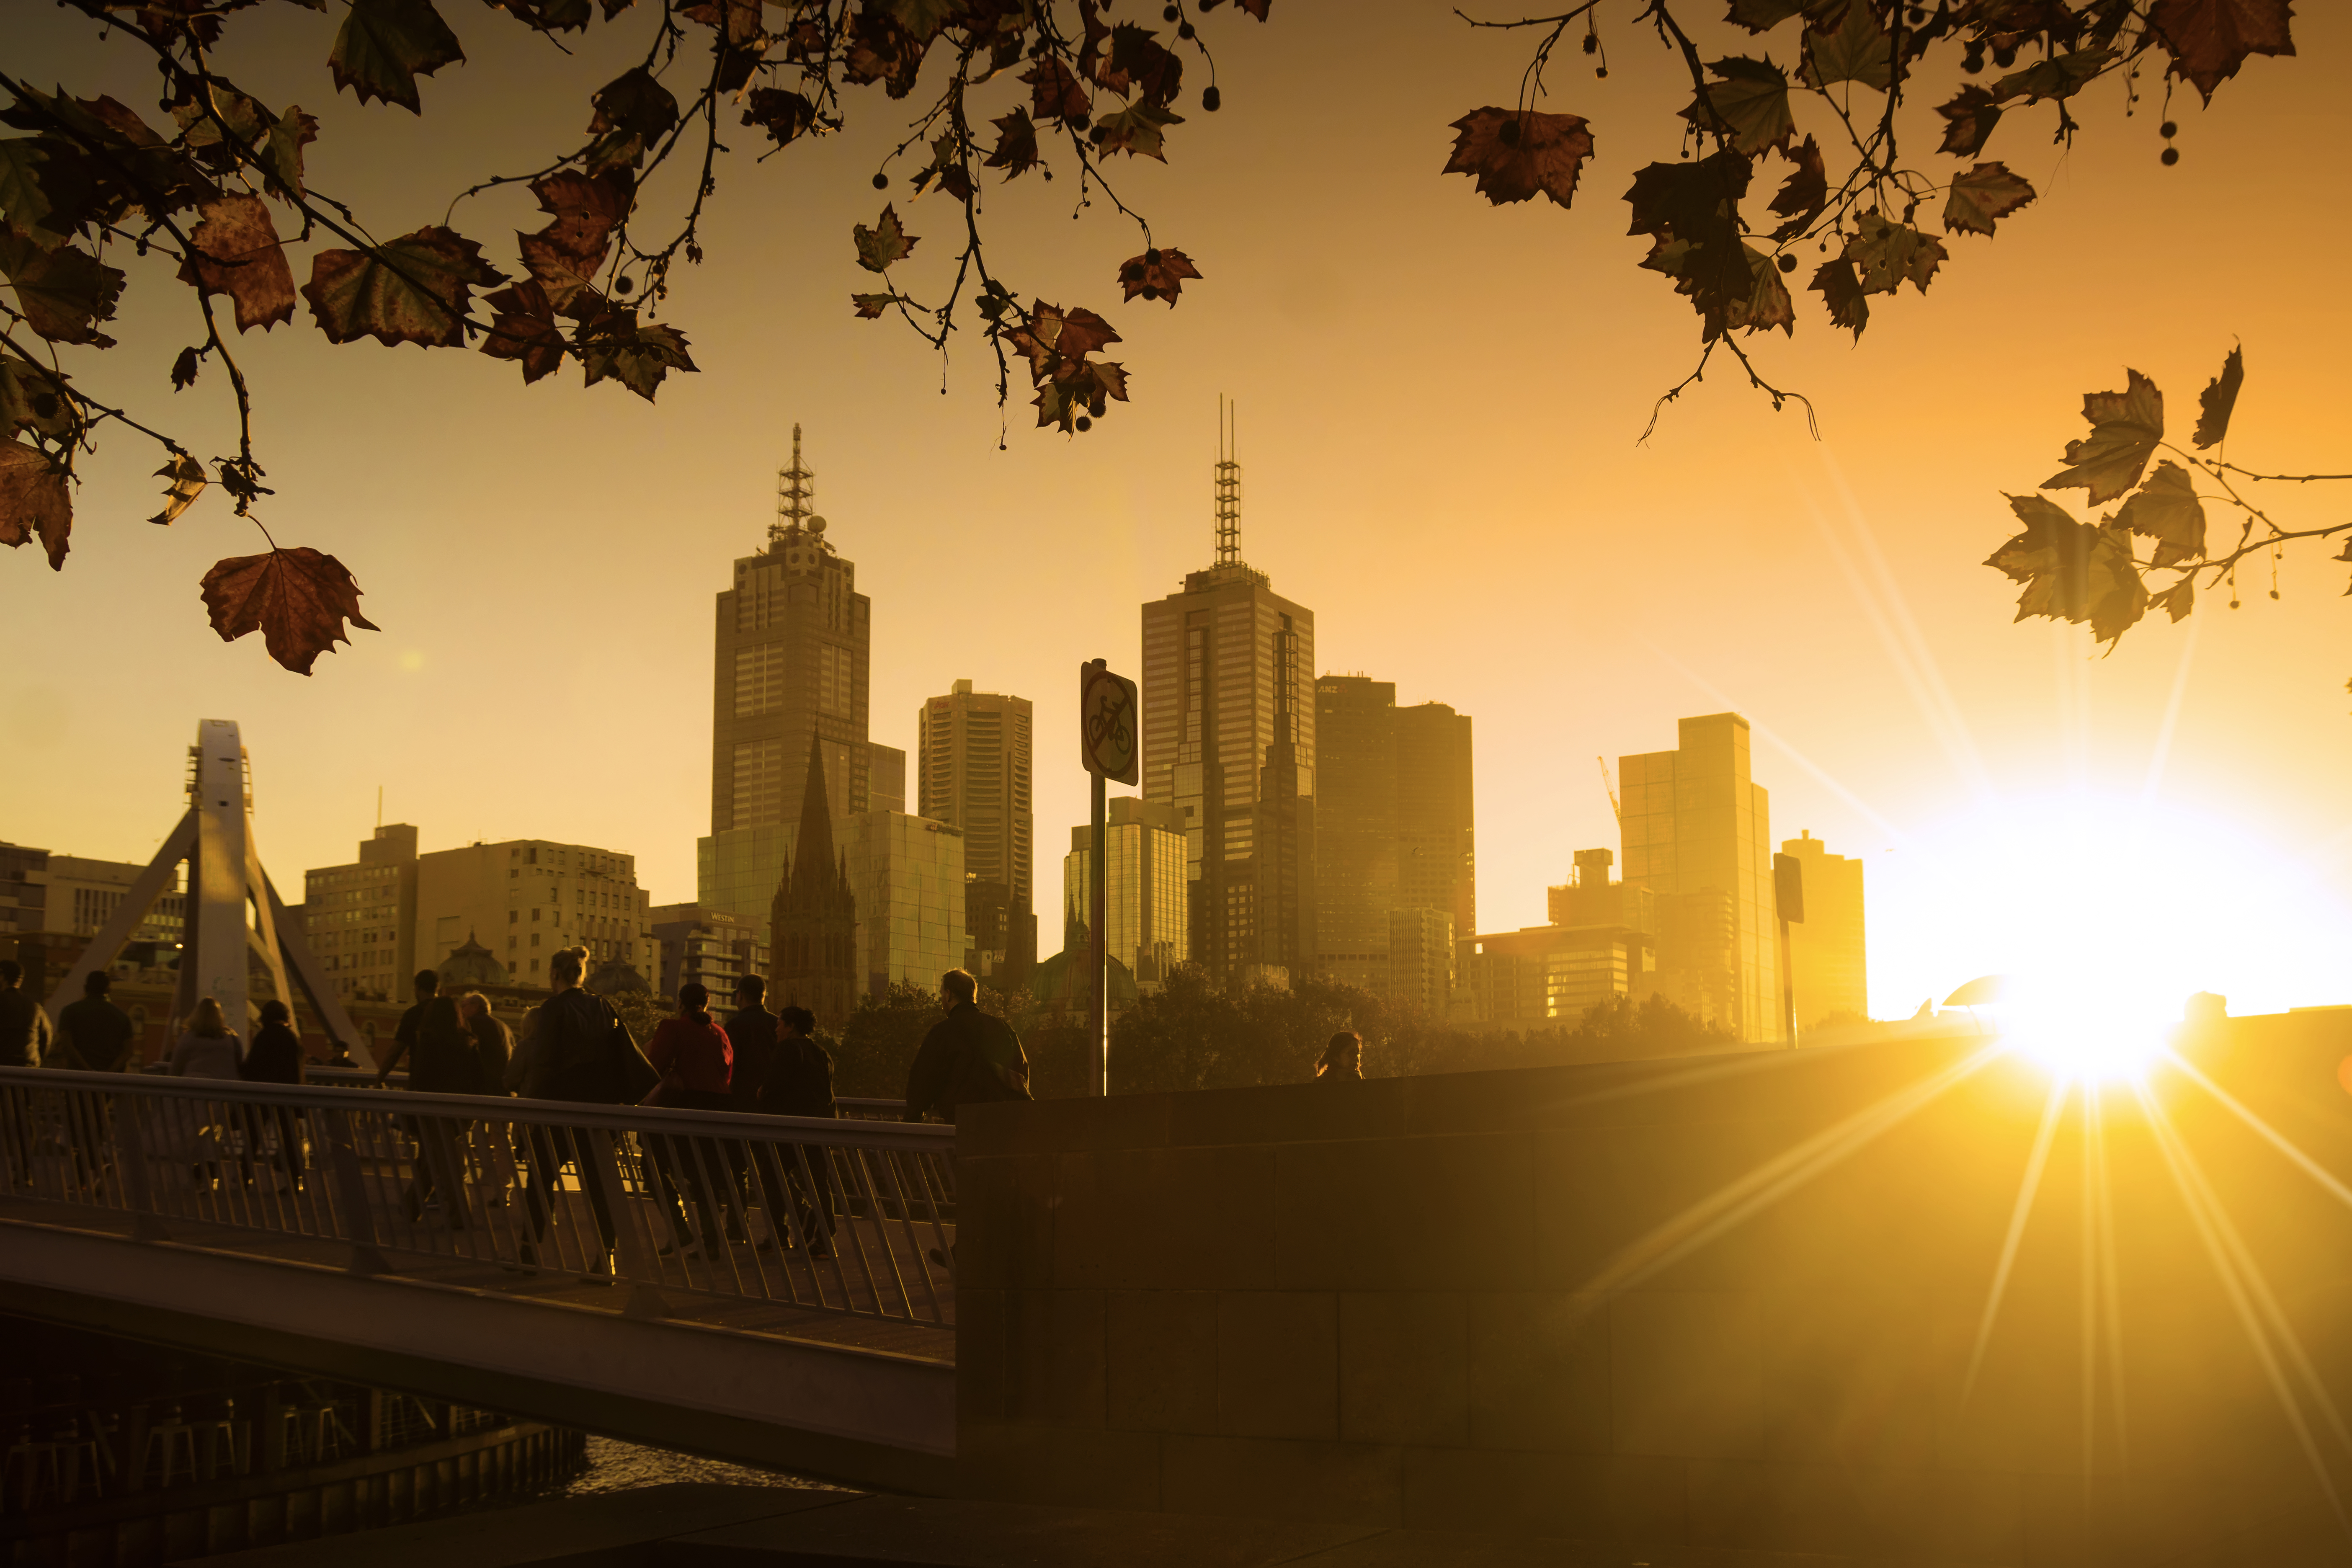 Melbourne at sunrise